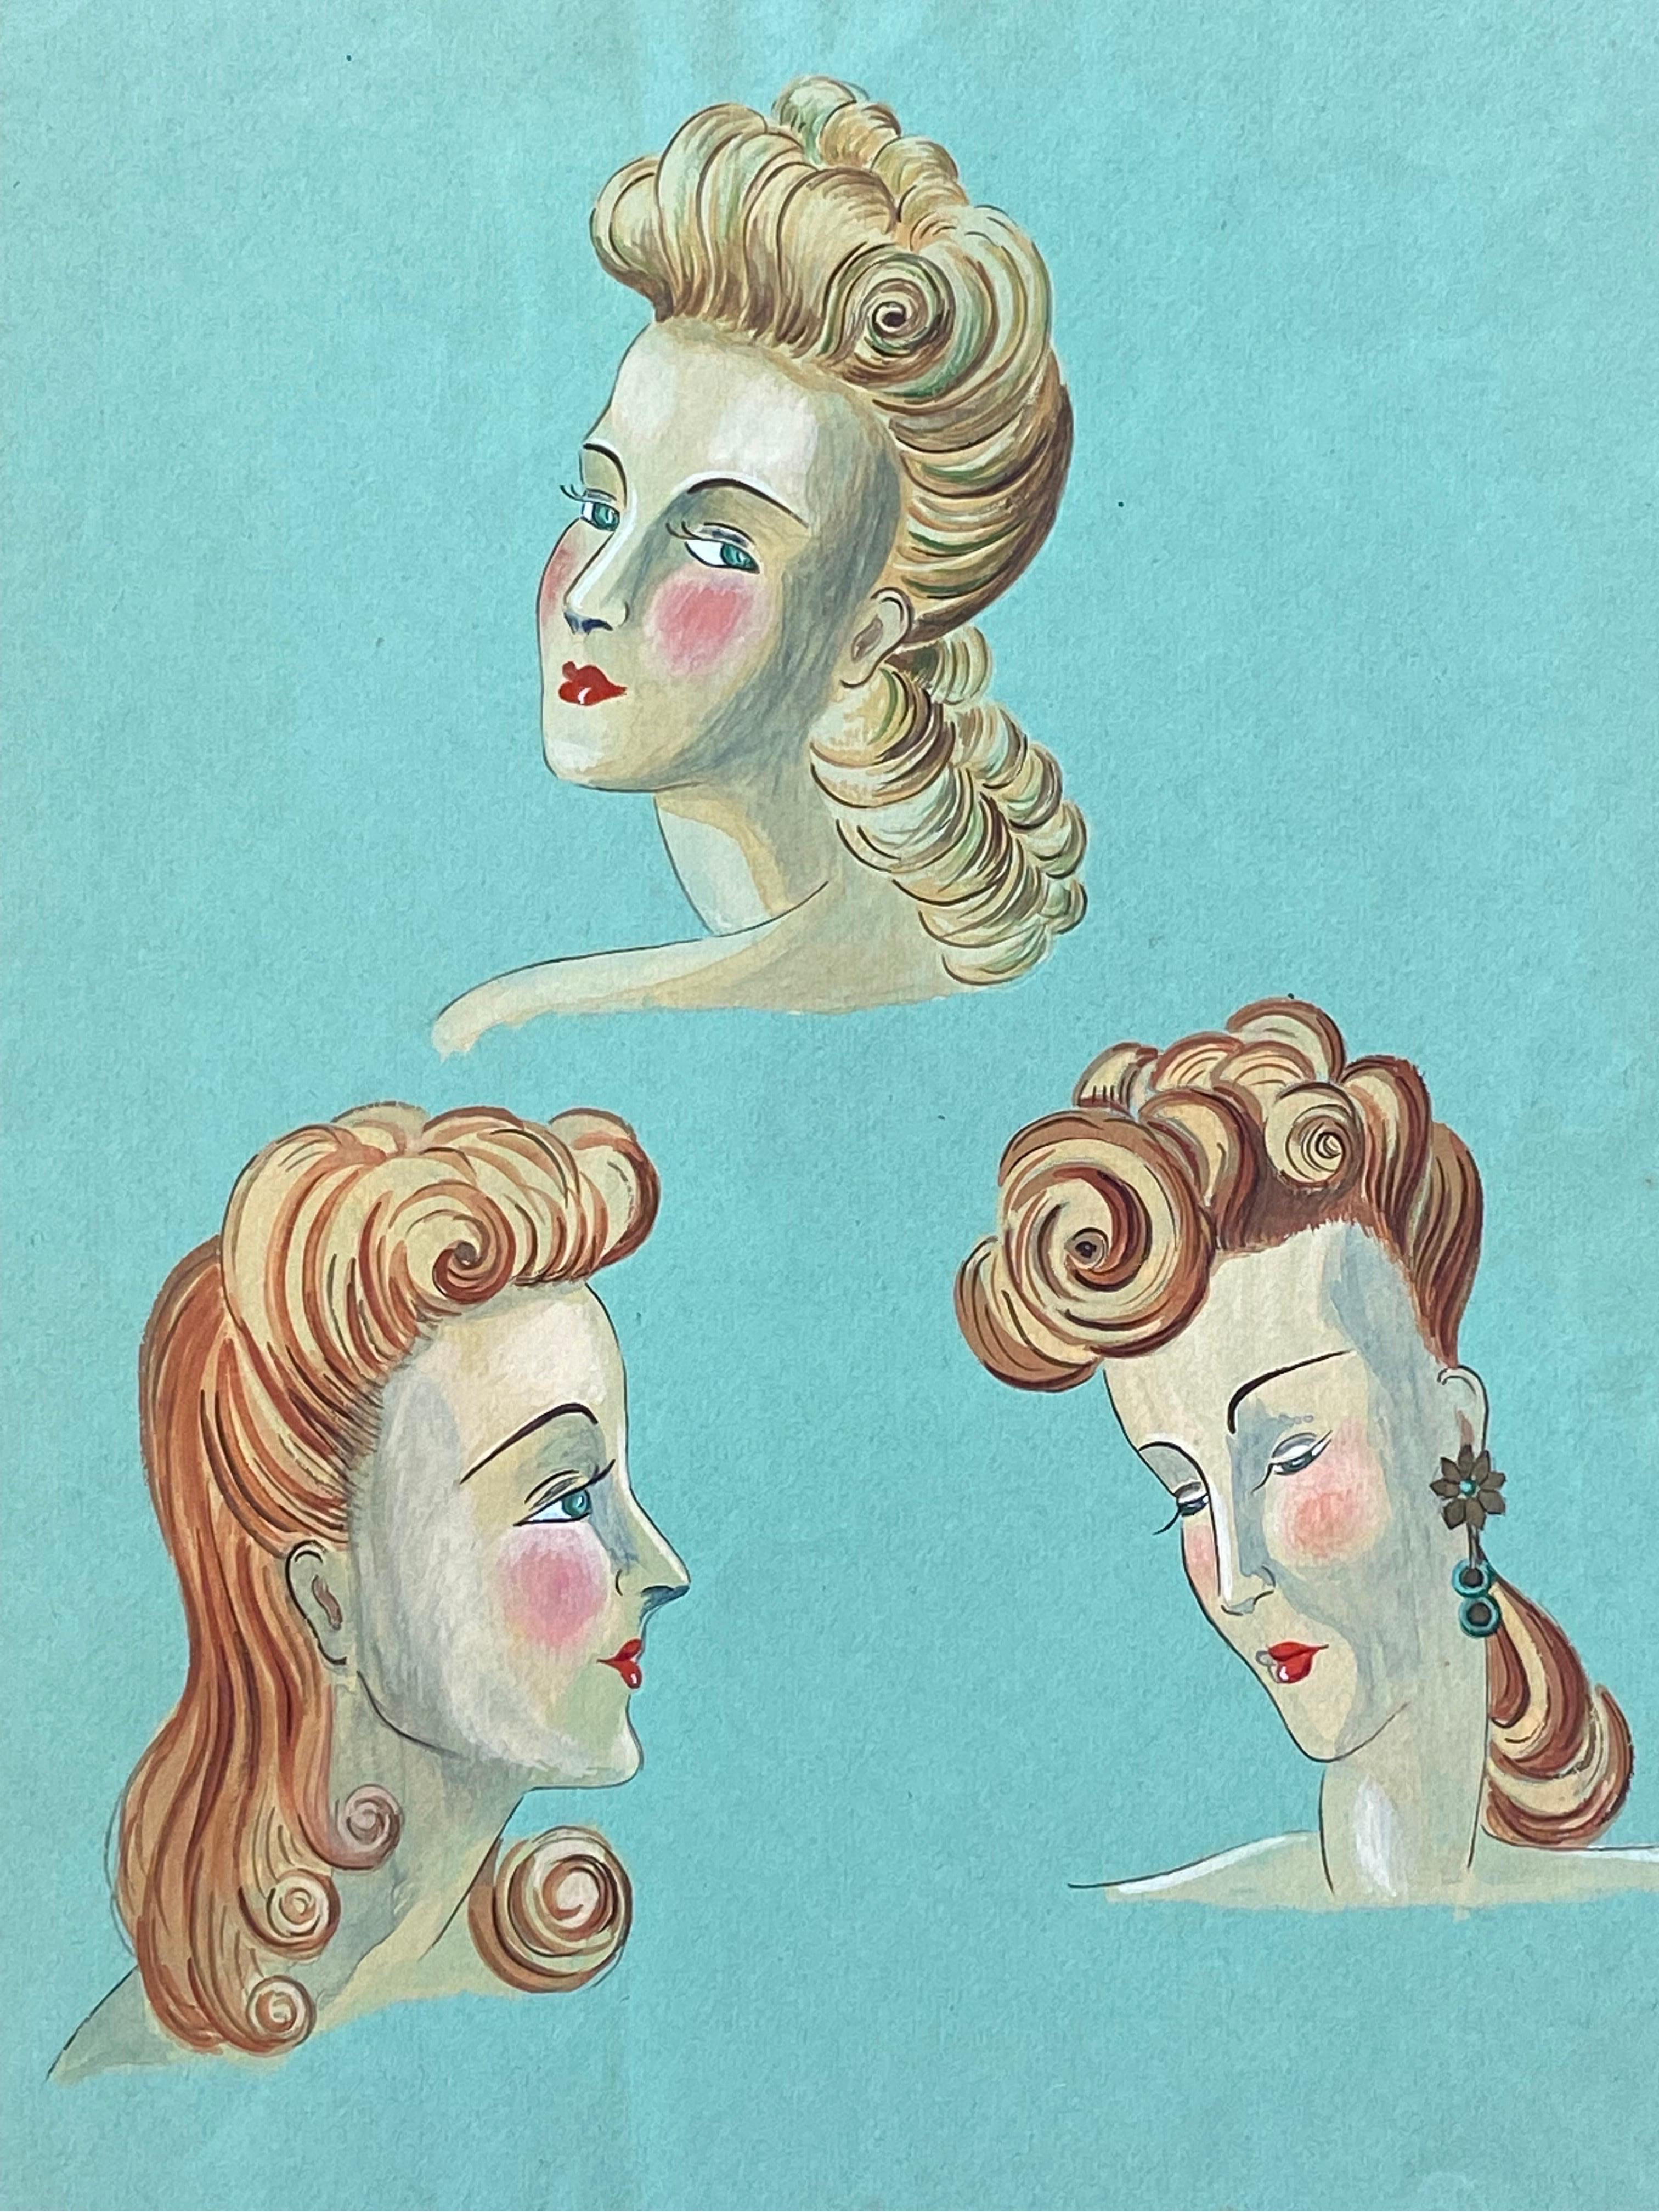 Geneviève Thomas Portrait Painting - 1940's French Fashion Illustration - Elegant Three Women Face Portraits